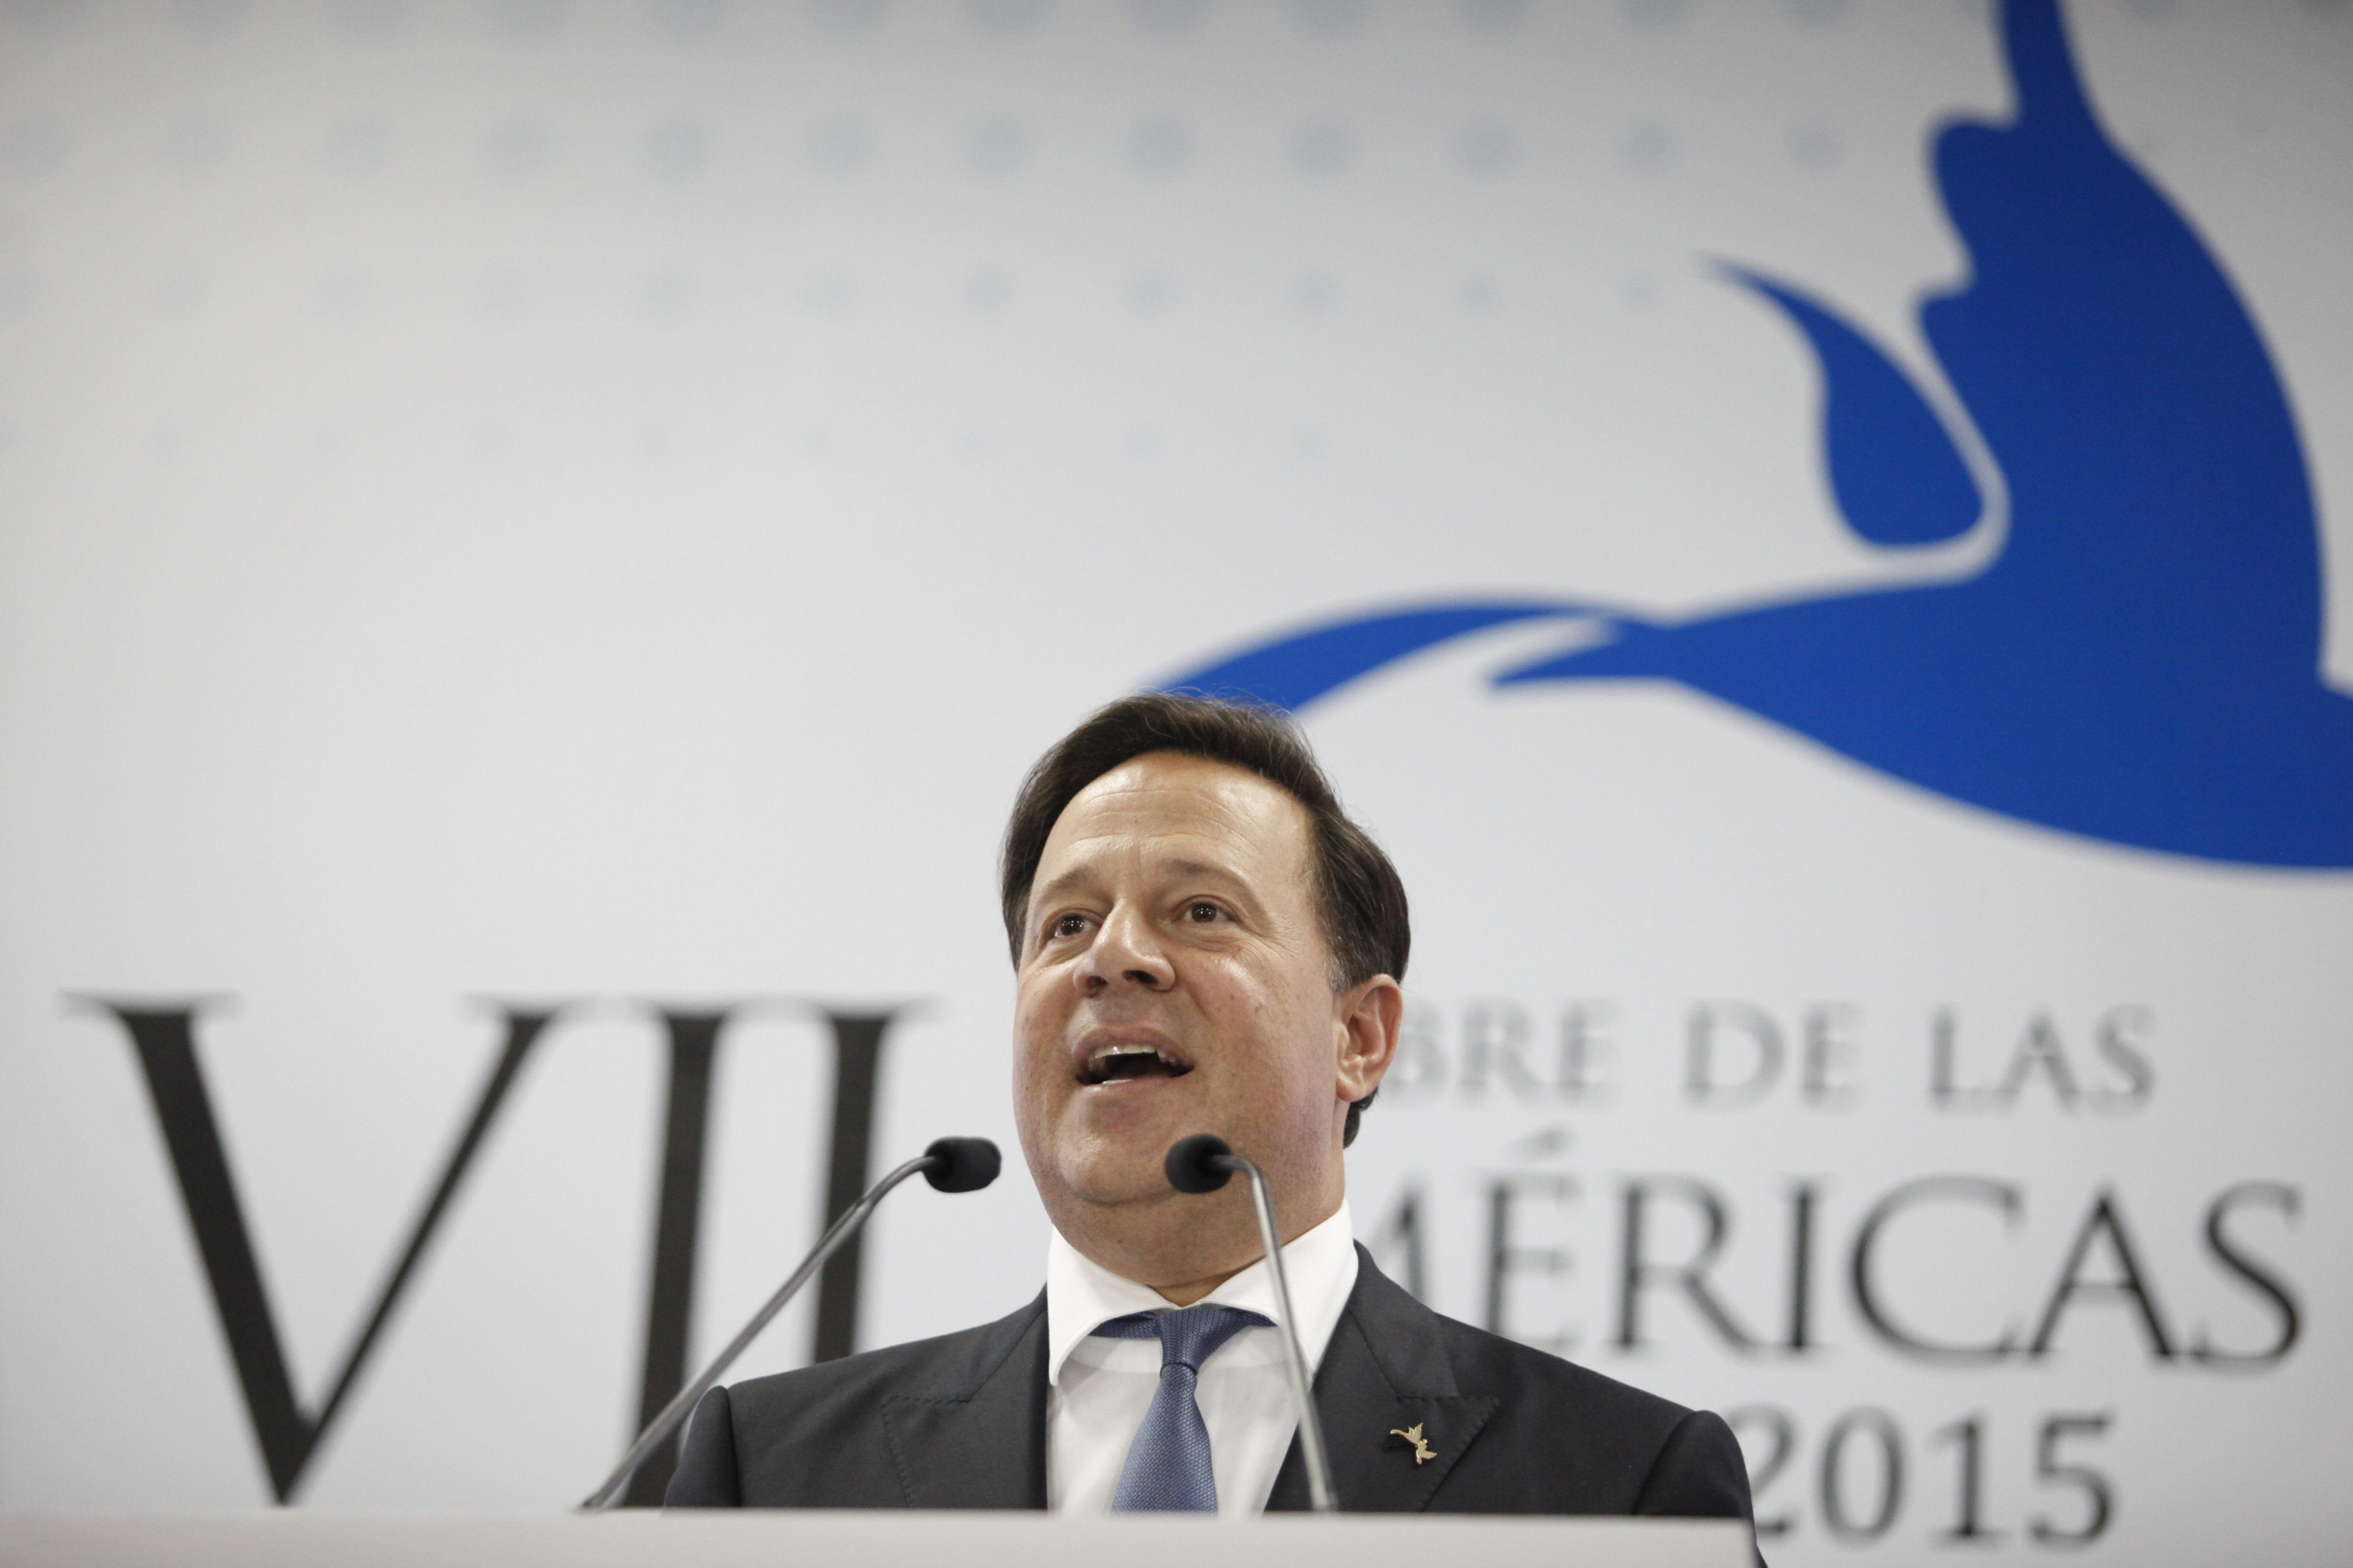 Juan Carlos Varela: Reto de Cumbre es retomar agenda fortalecida en Panamá